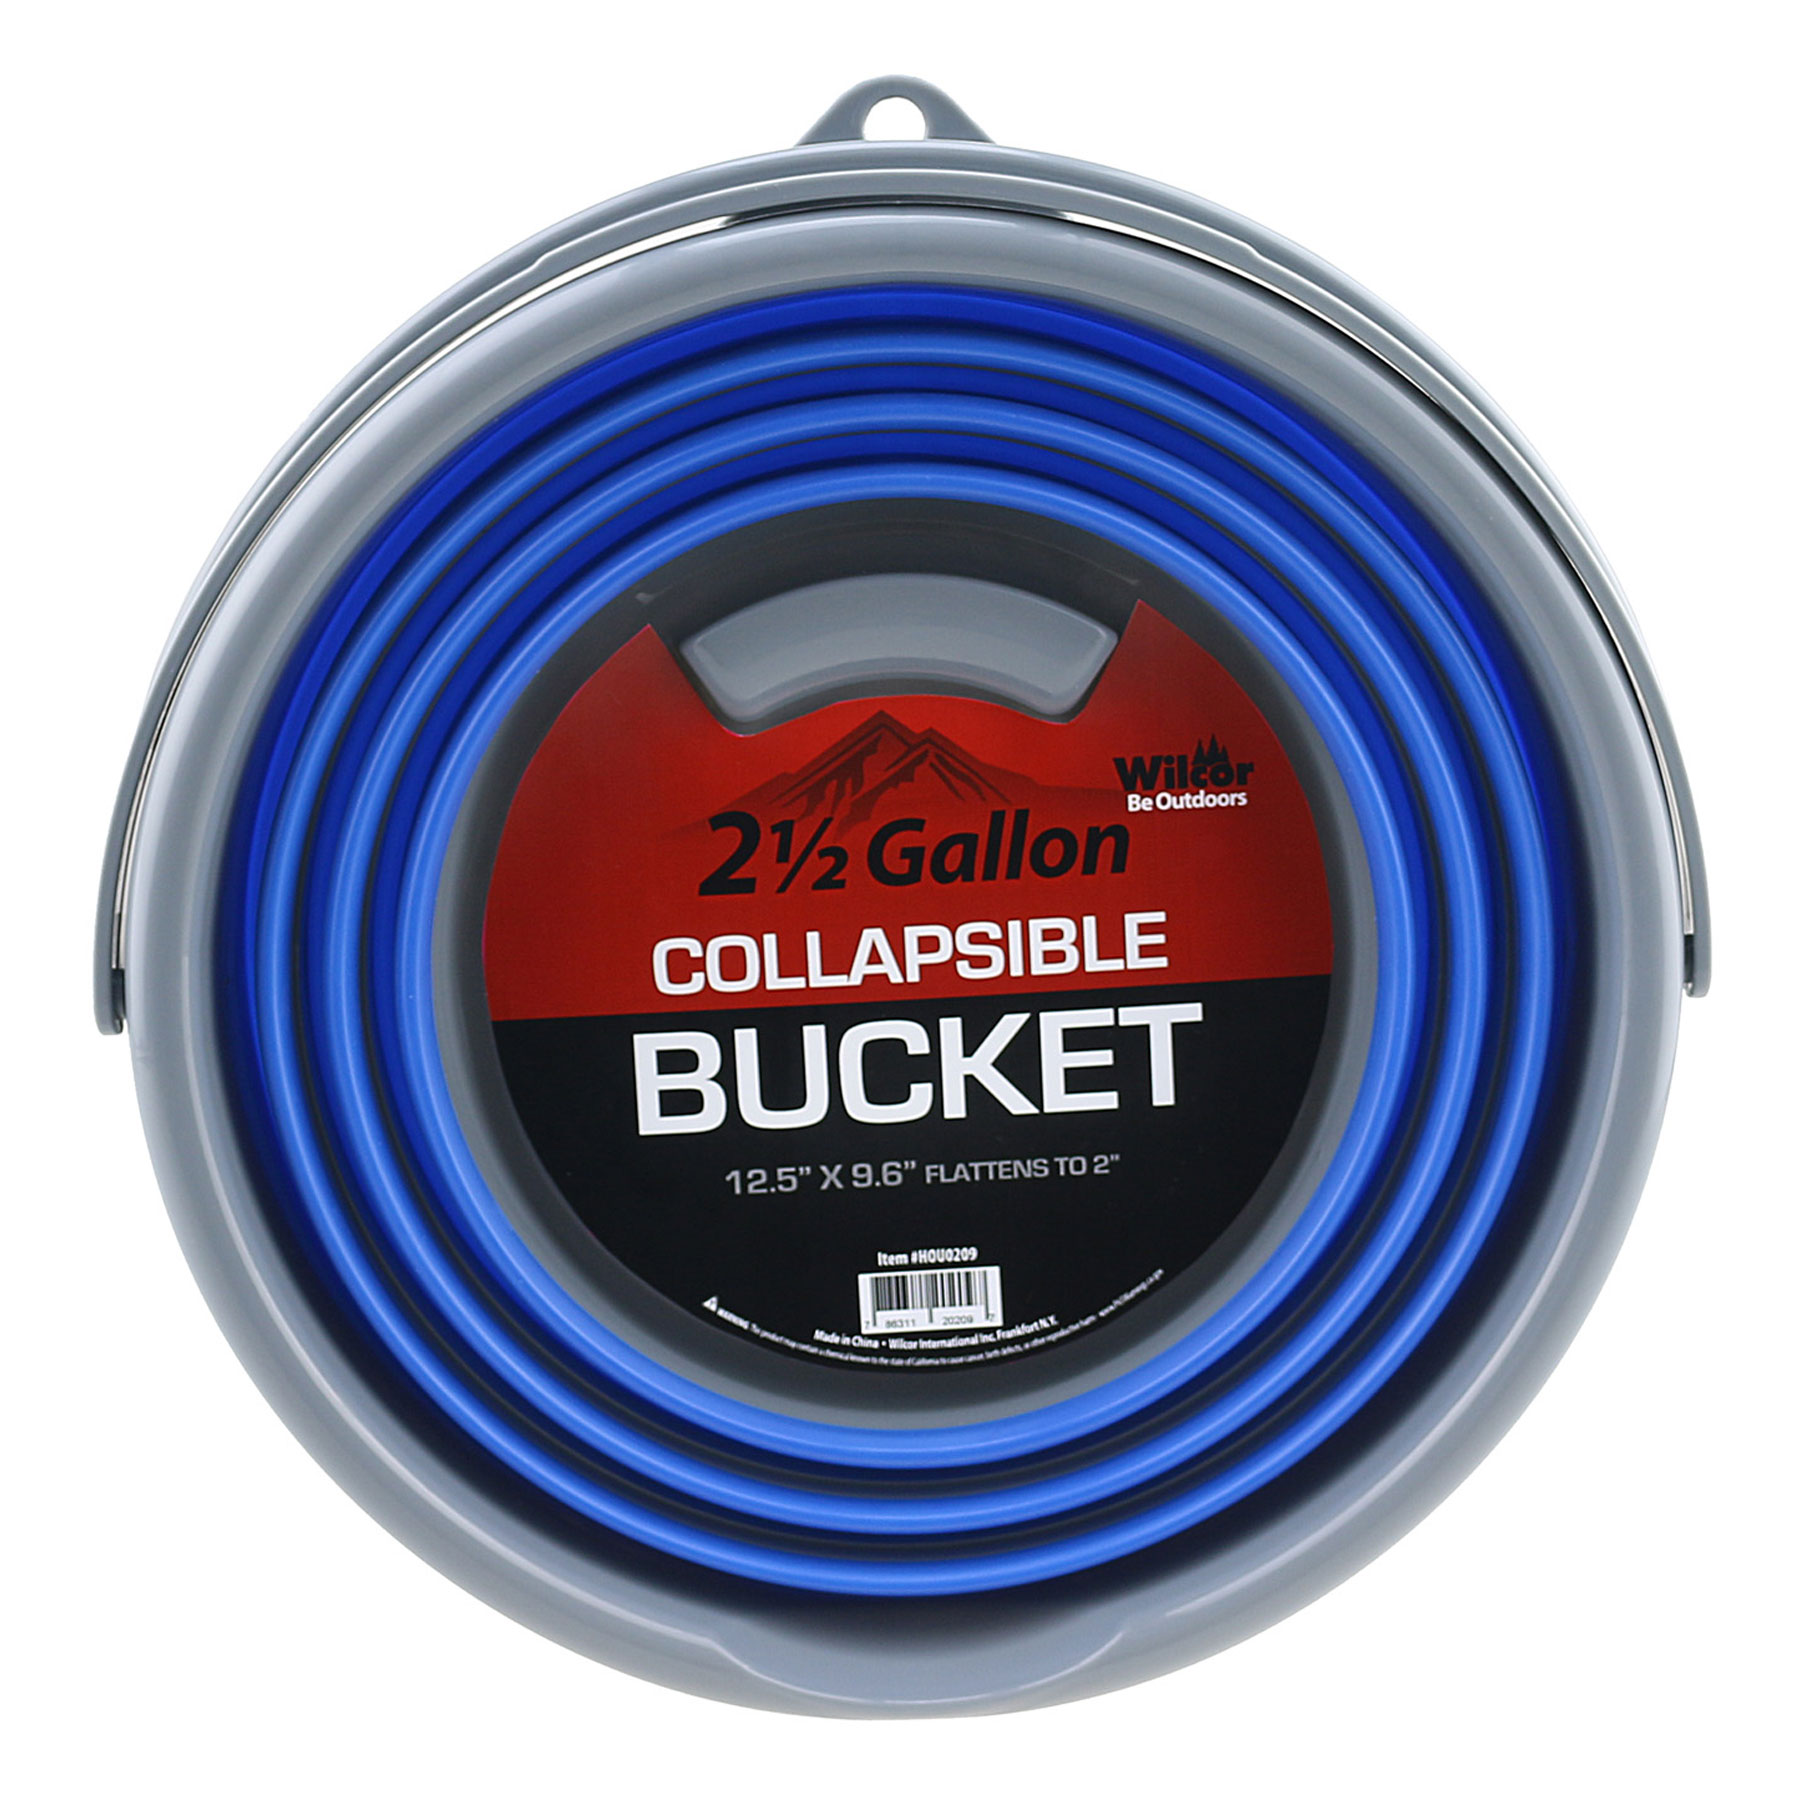 https://www.wilcor.net/productimages/hou0209_collapsible_10liter_bucket_hanging.jpg